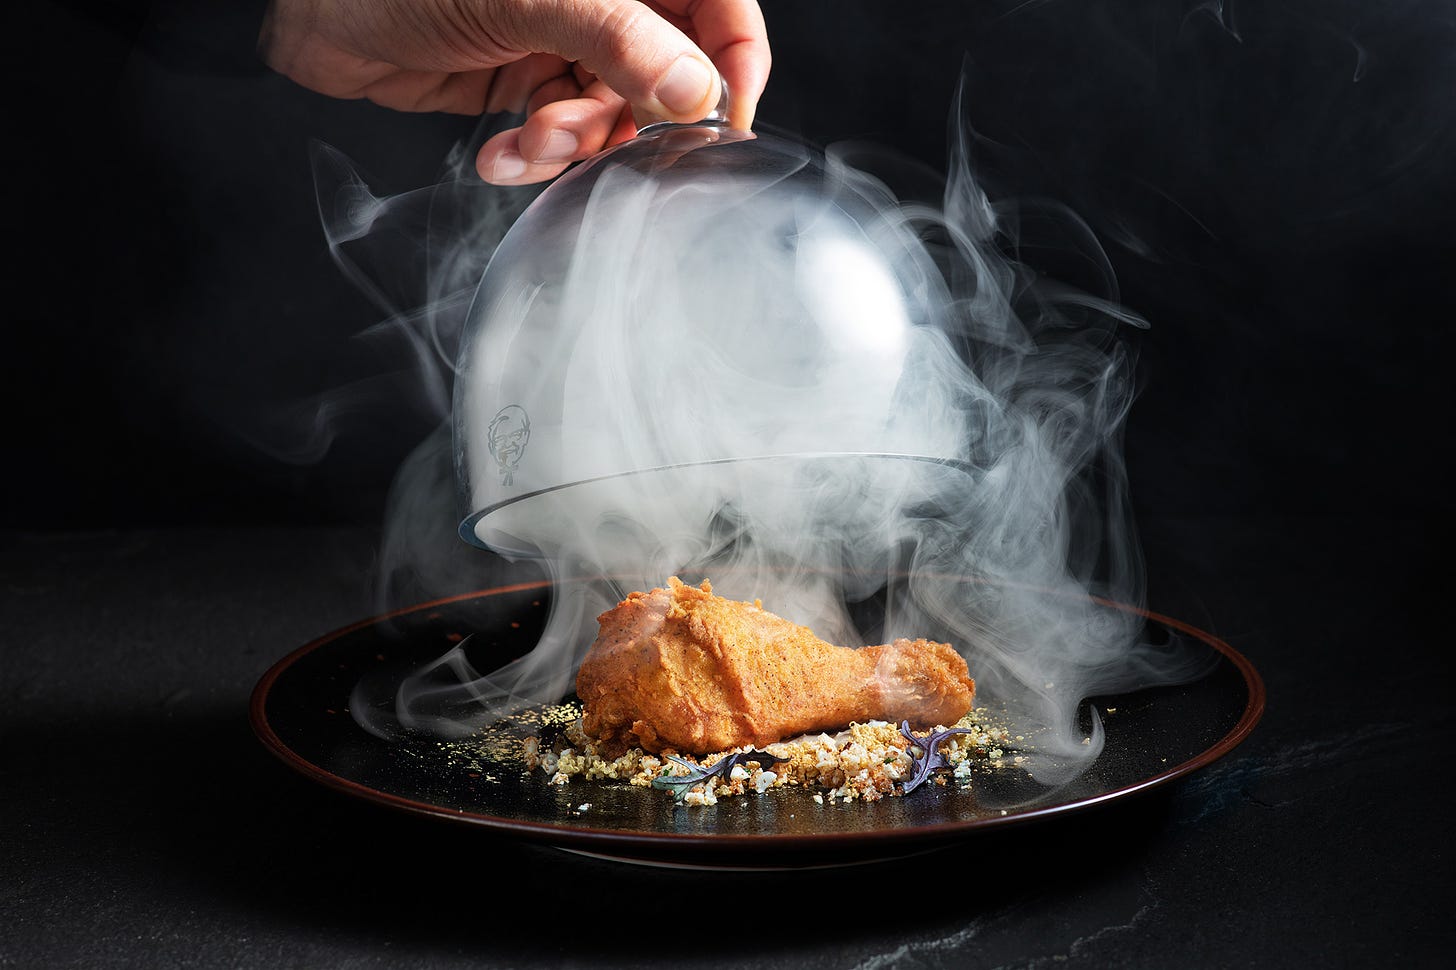 KFC offers an 11-course menu - The FoodTech Confidential Newsletter